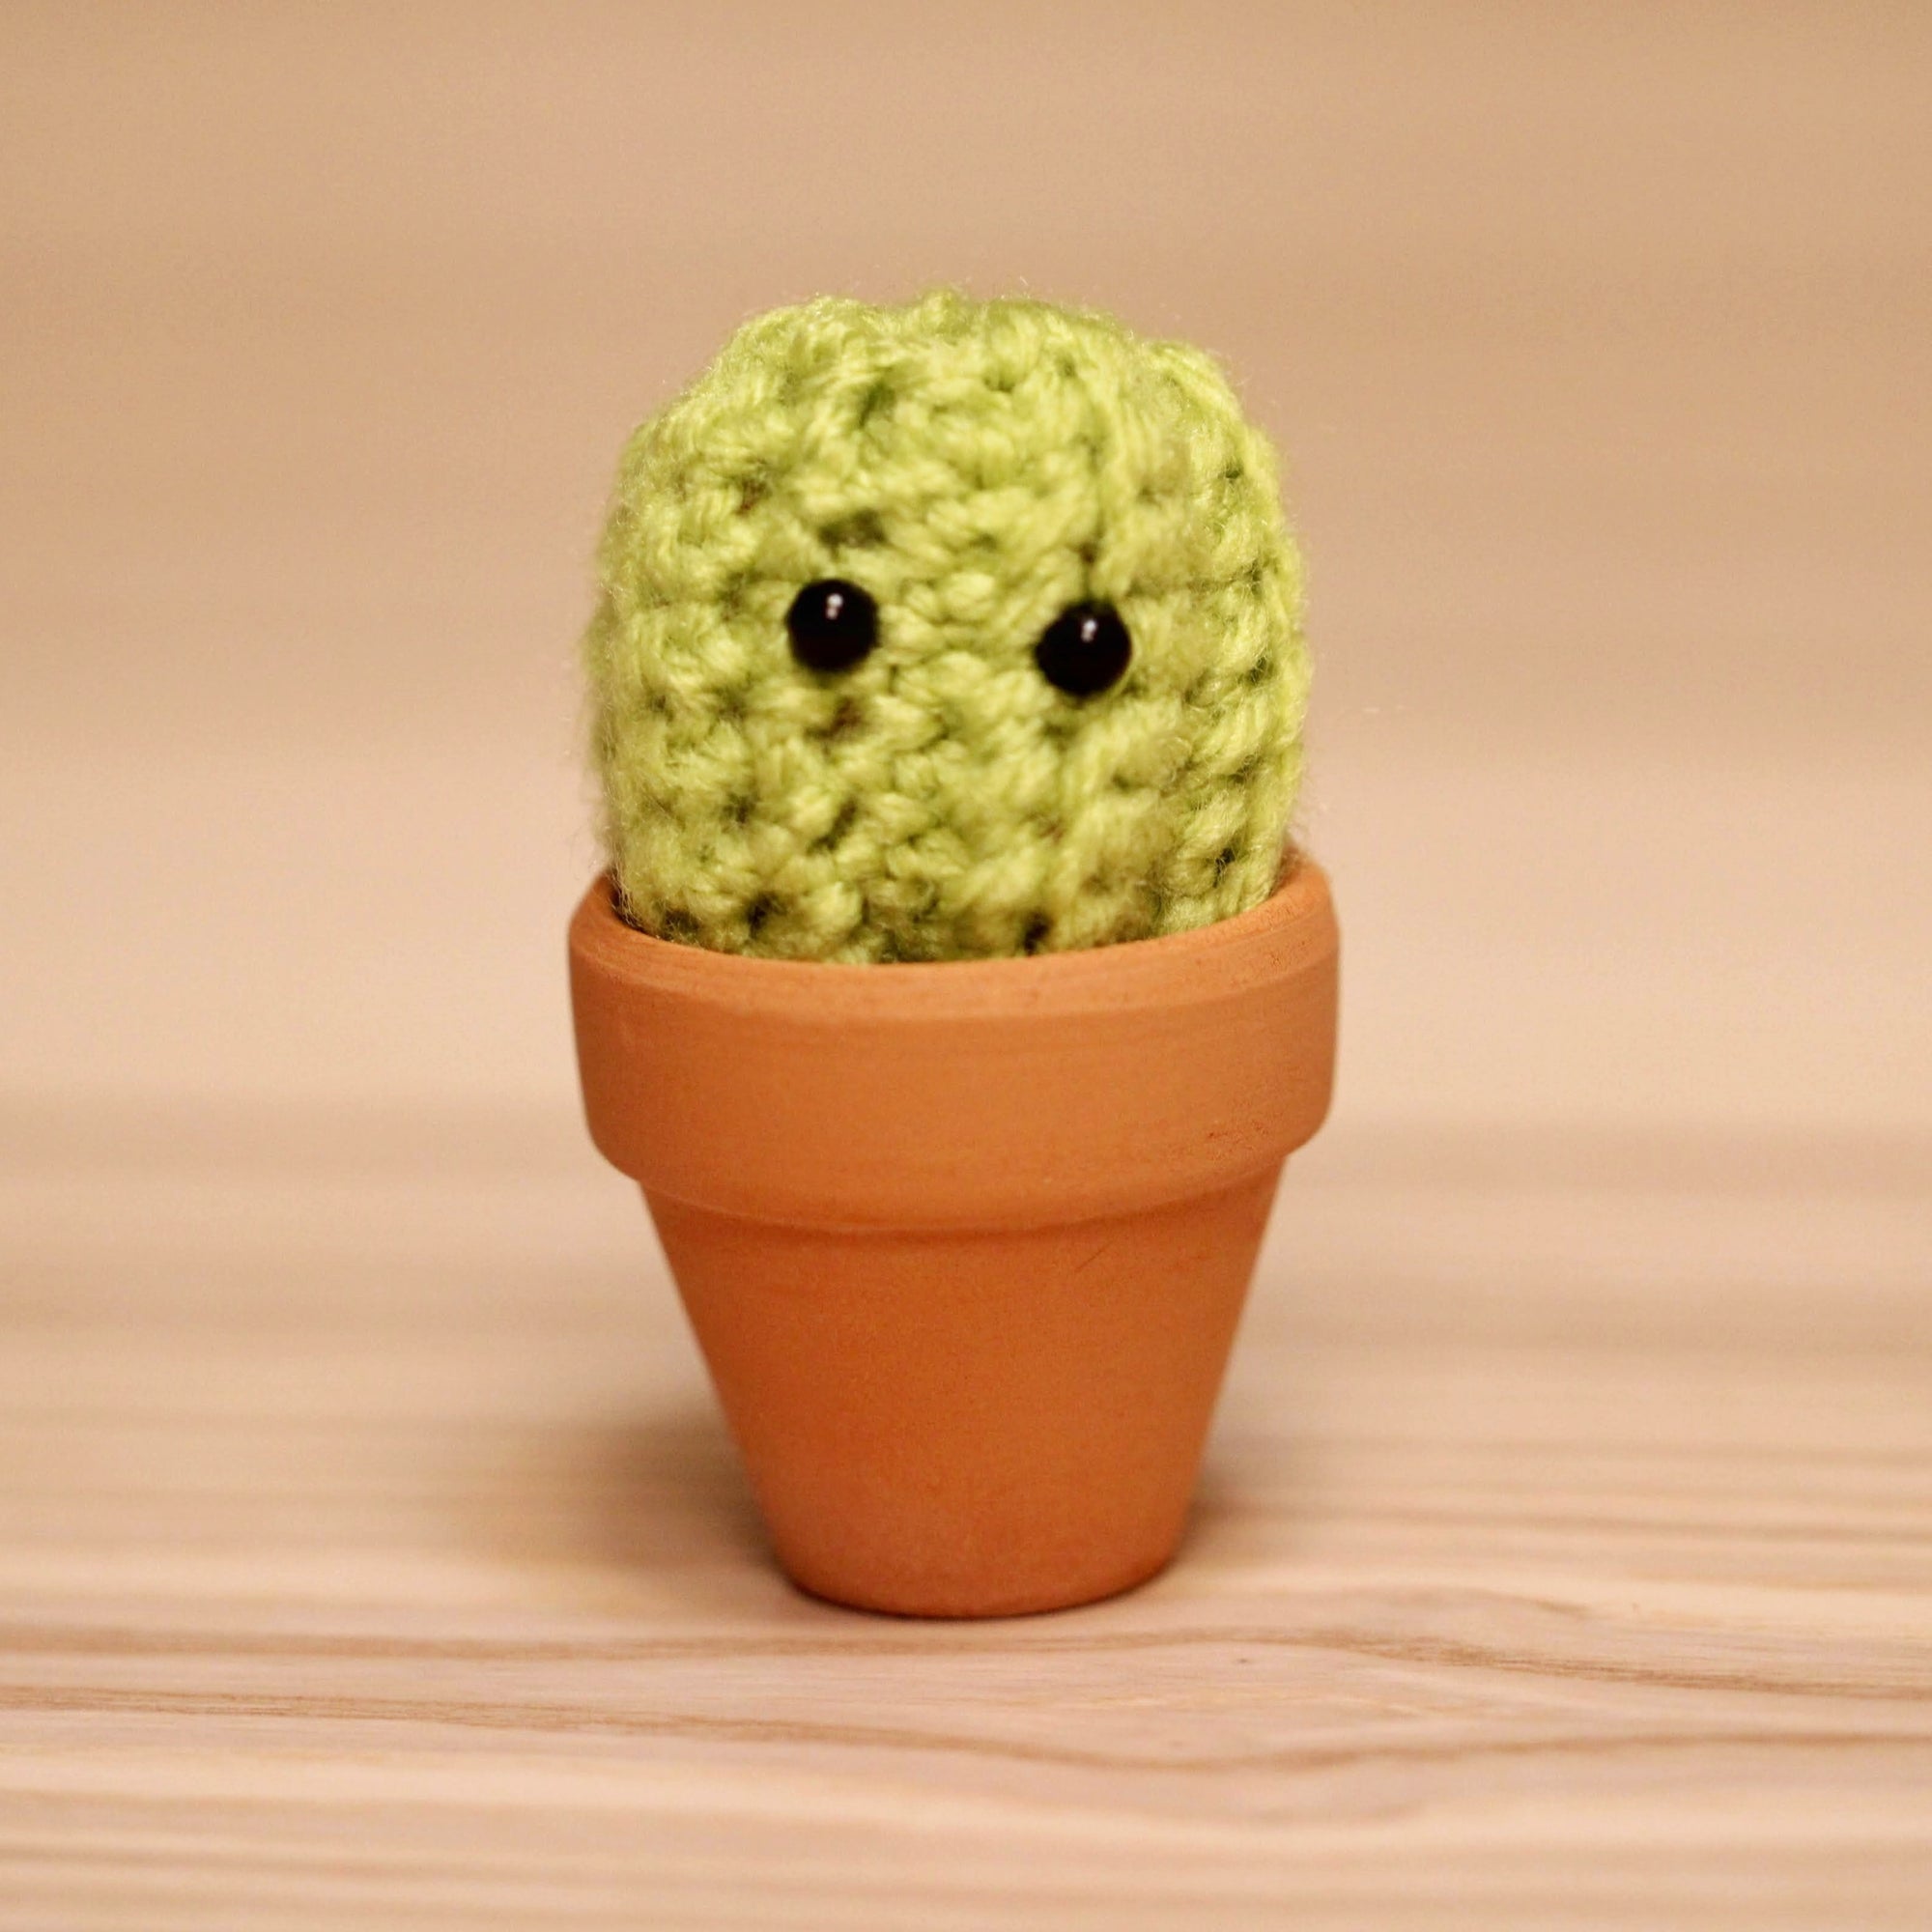 CROCHET CLASS: Amigurumi - Crochet a Mini Cactus